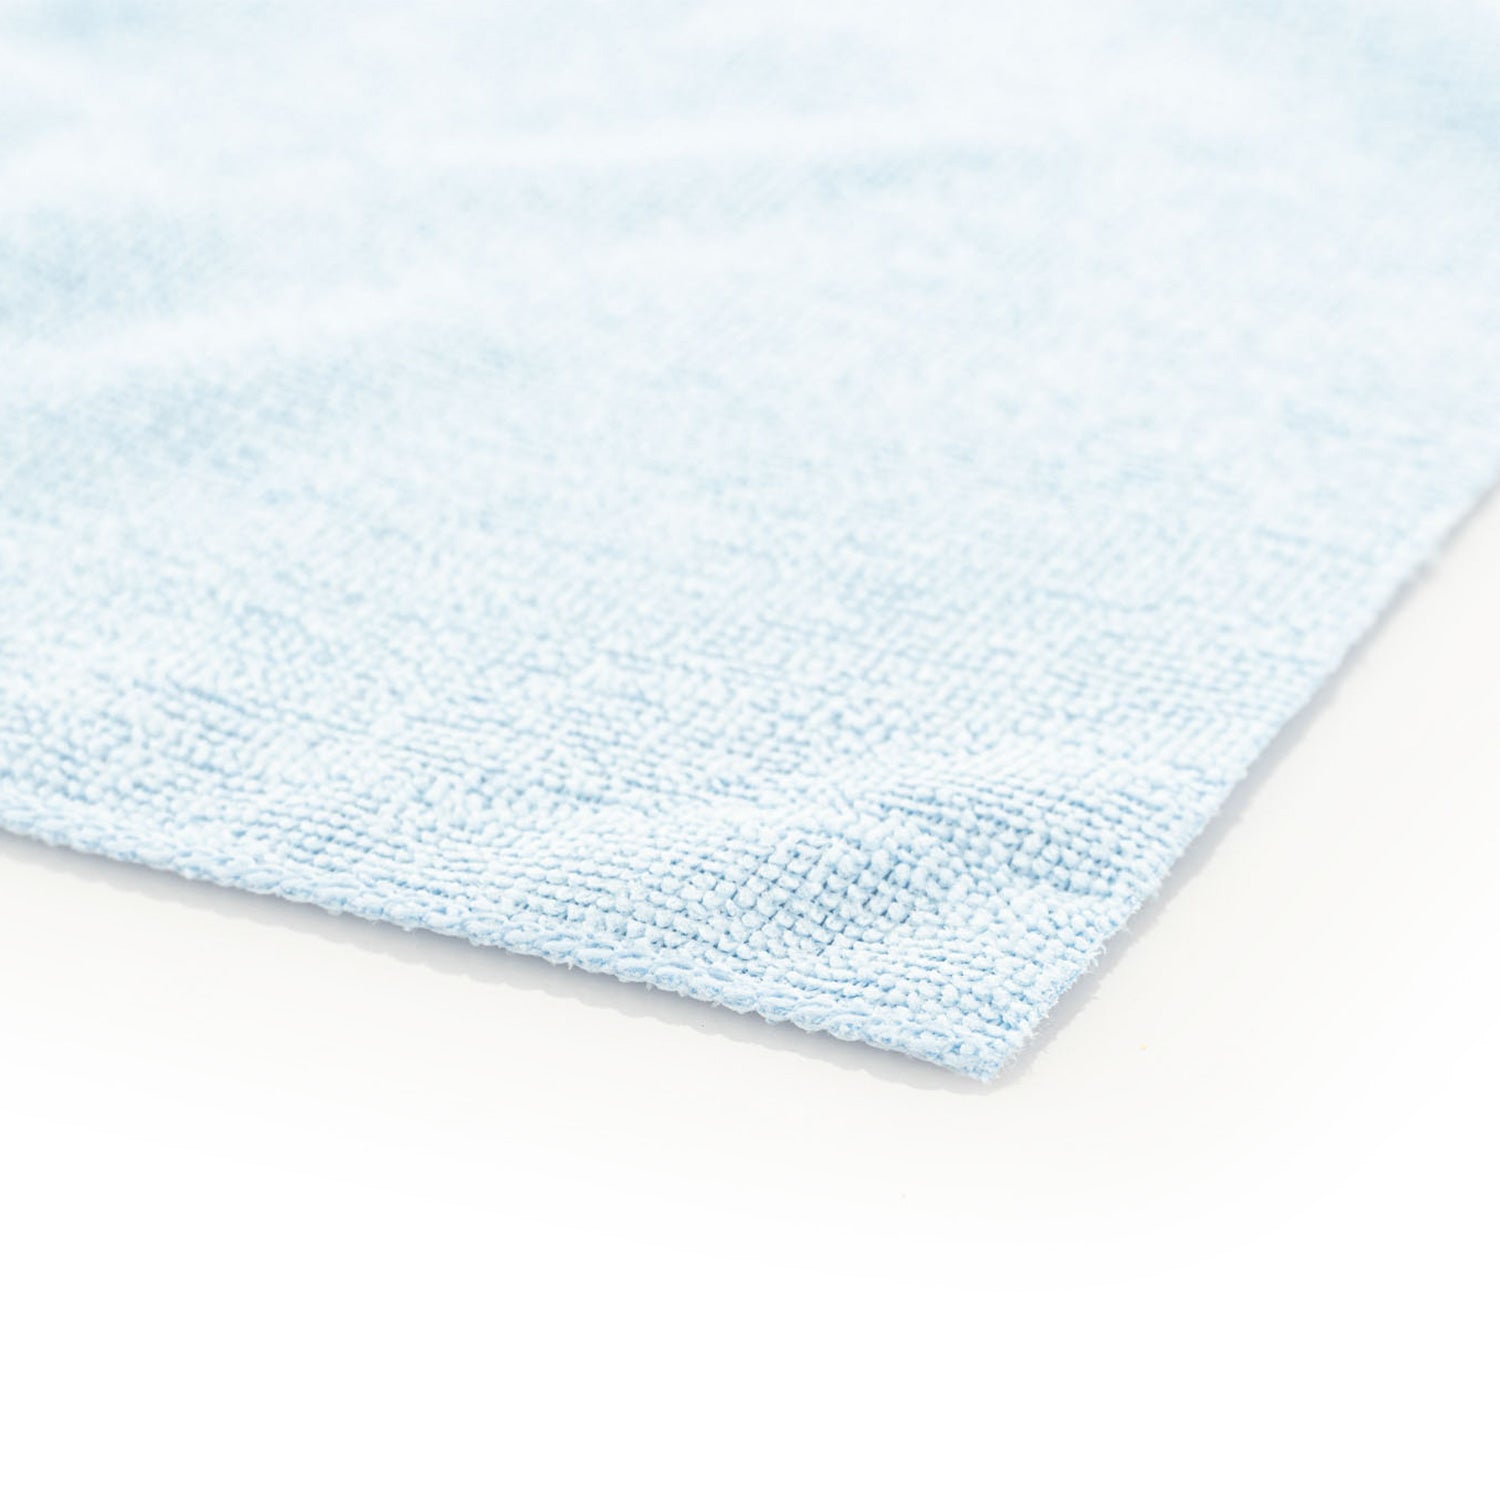 tear-n-clean-towel-close-up